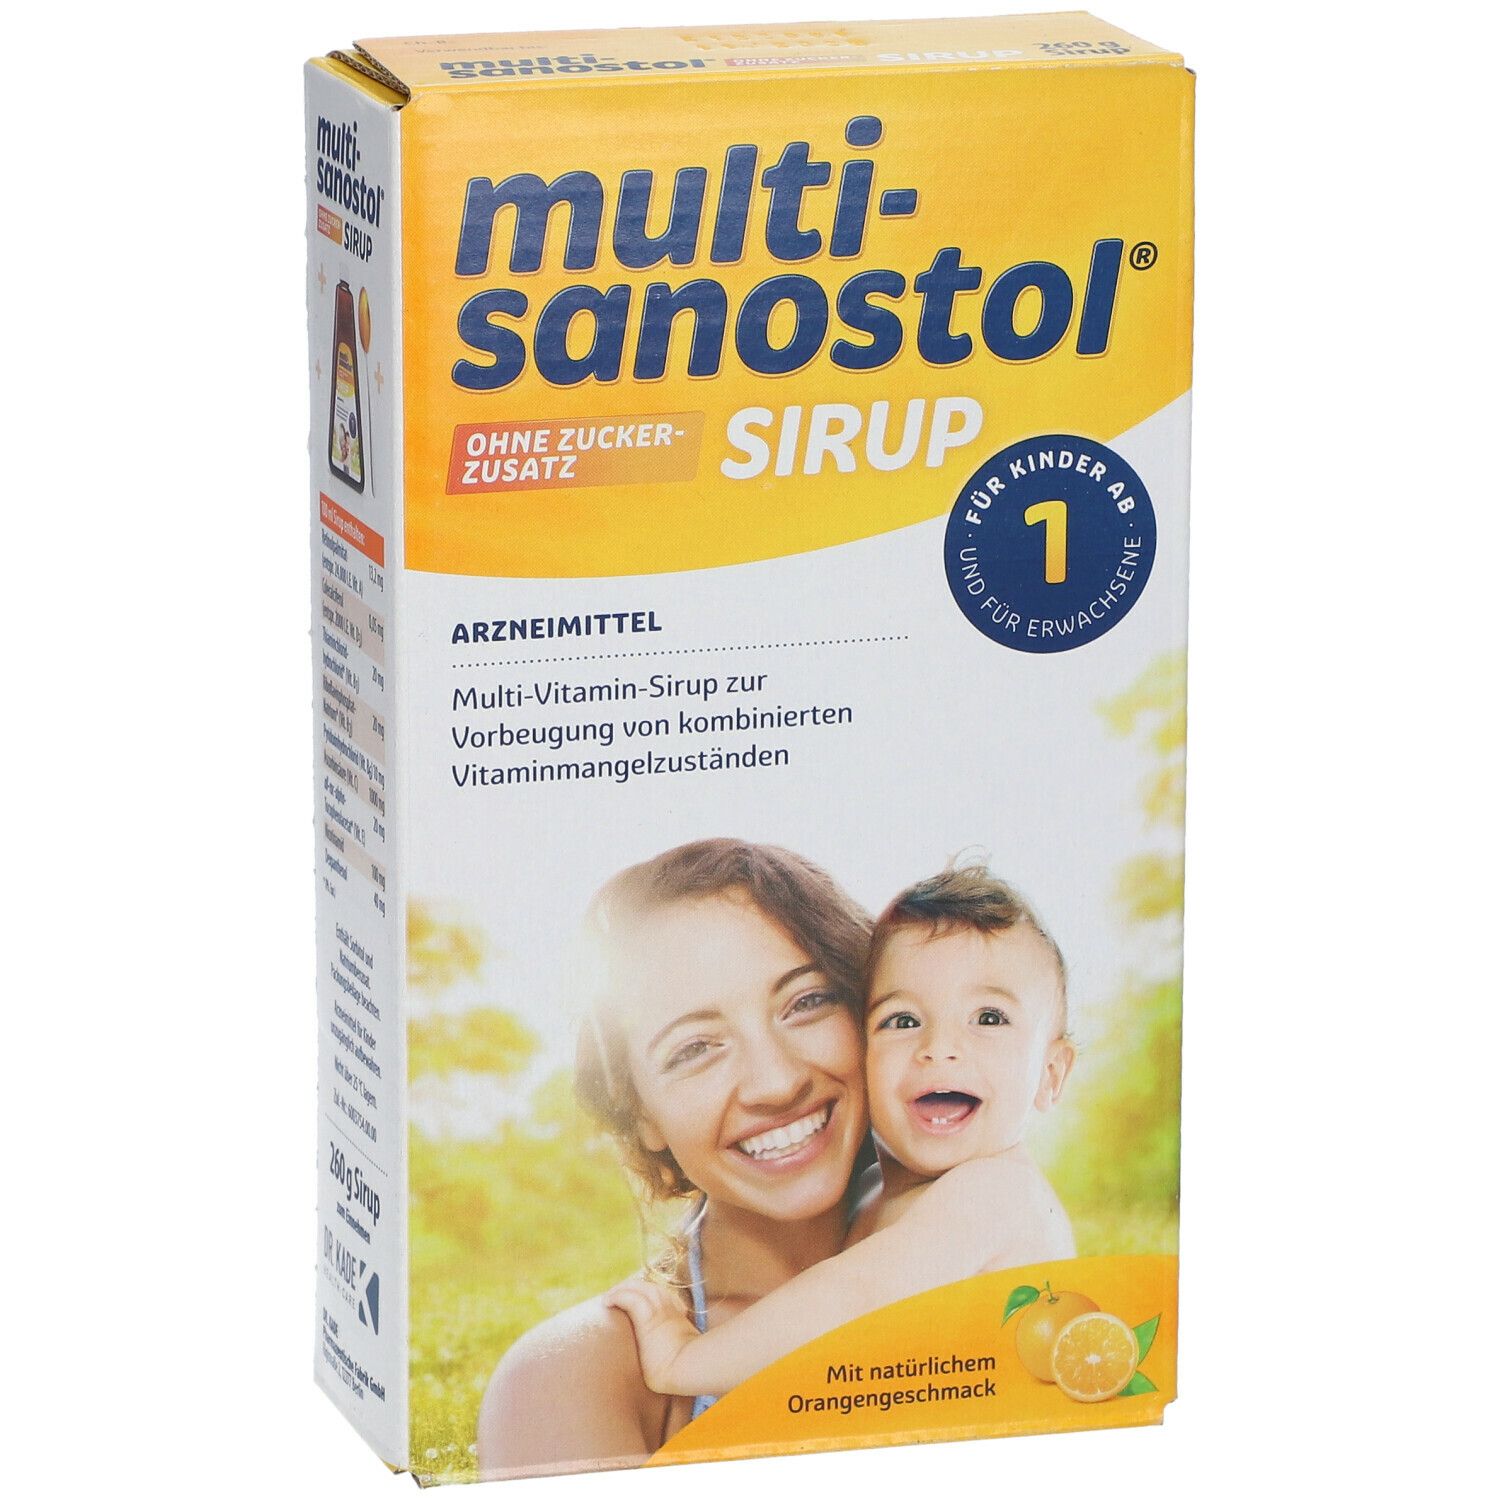 Multi-Sanostol® Sirup ohne Zucker